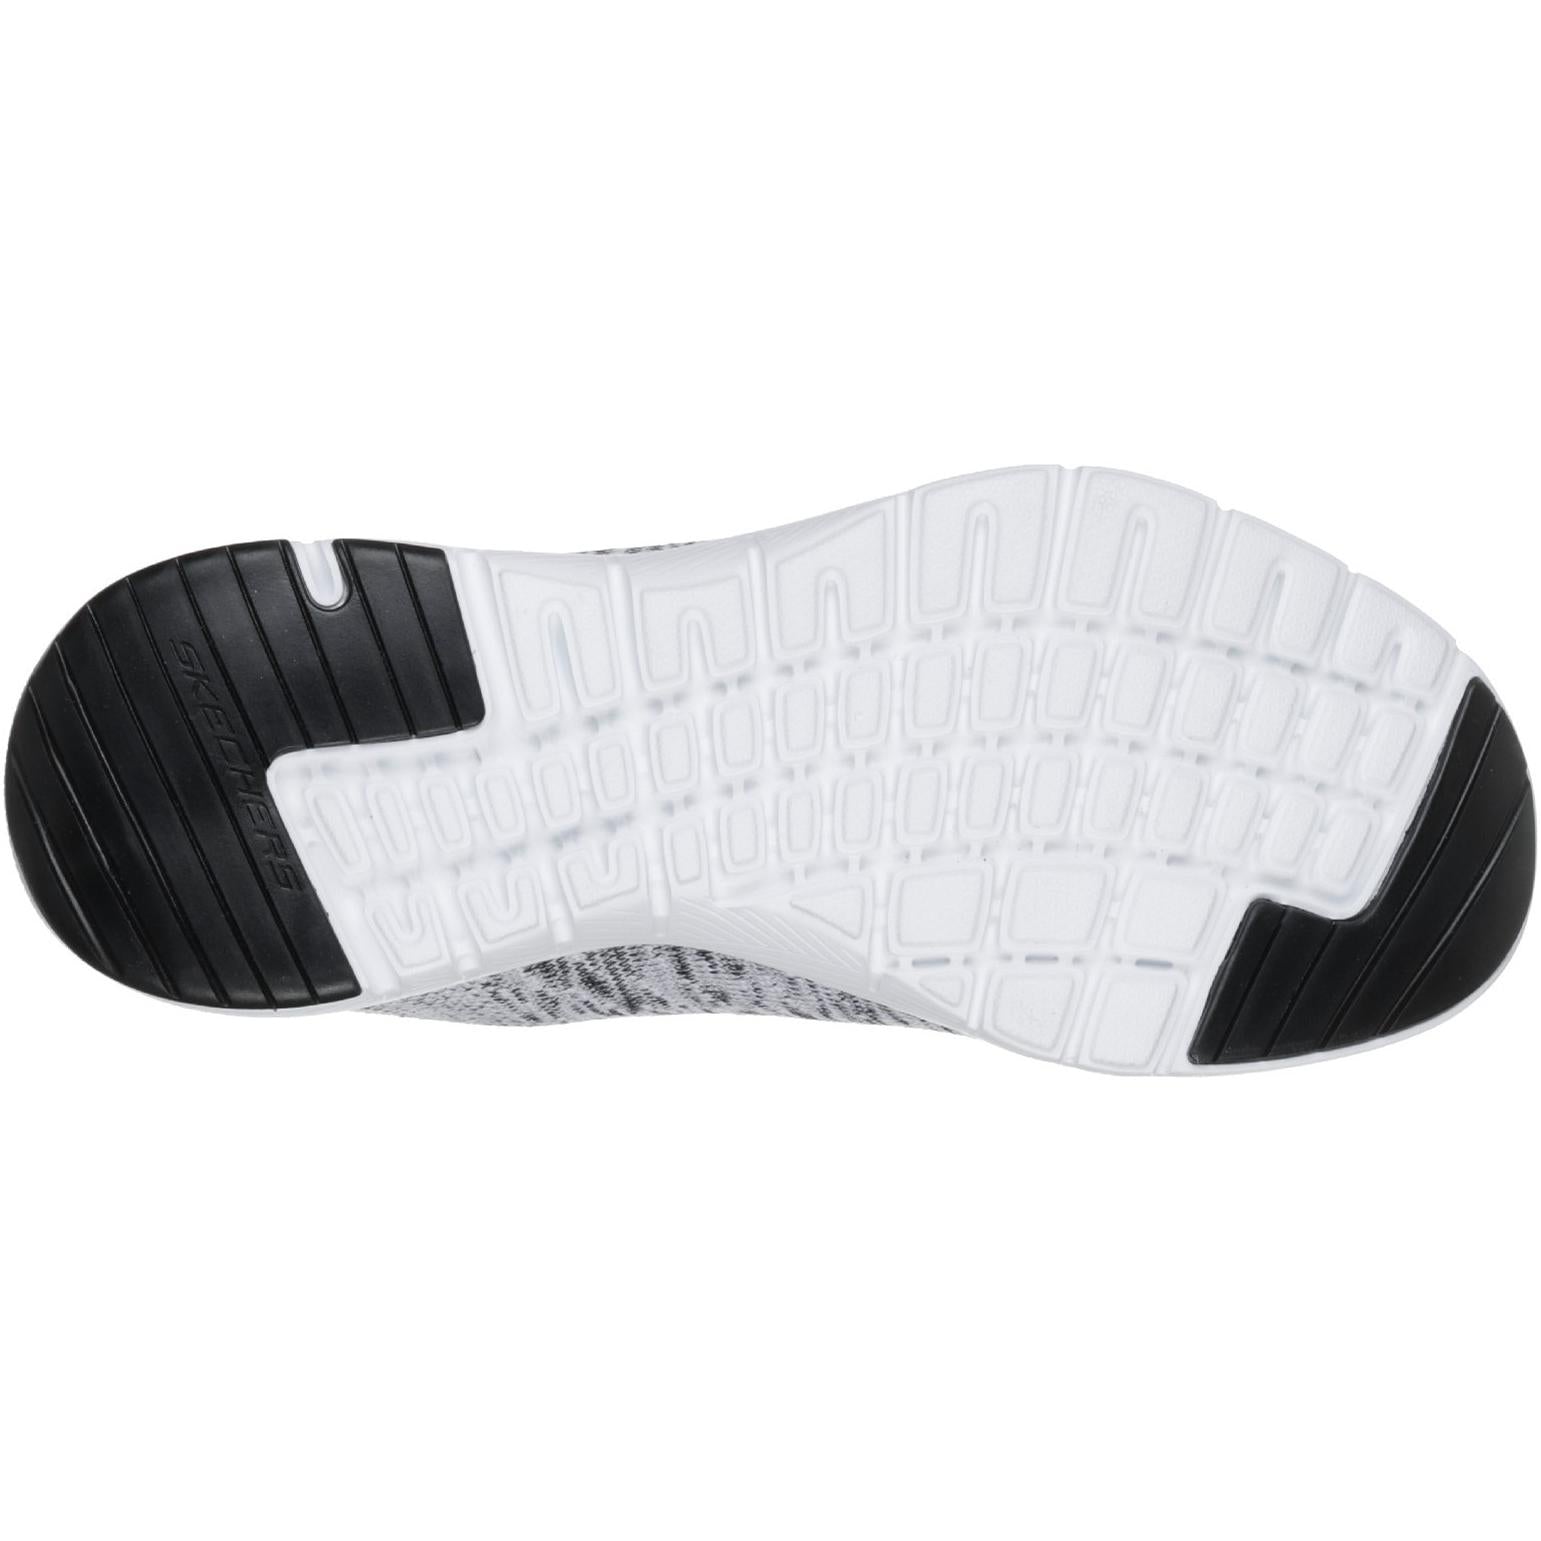 Skechers Flex Appeal 3.0 Lace Up Air Cooled Memory Foam Shoe